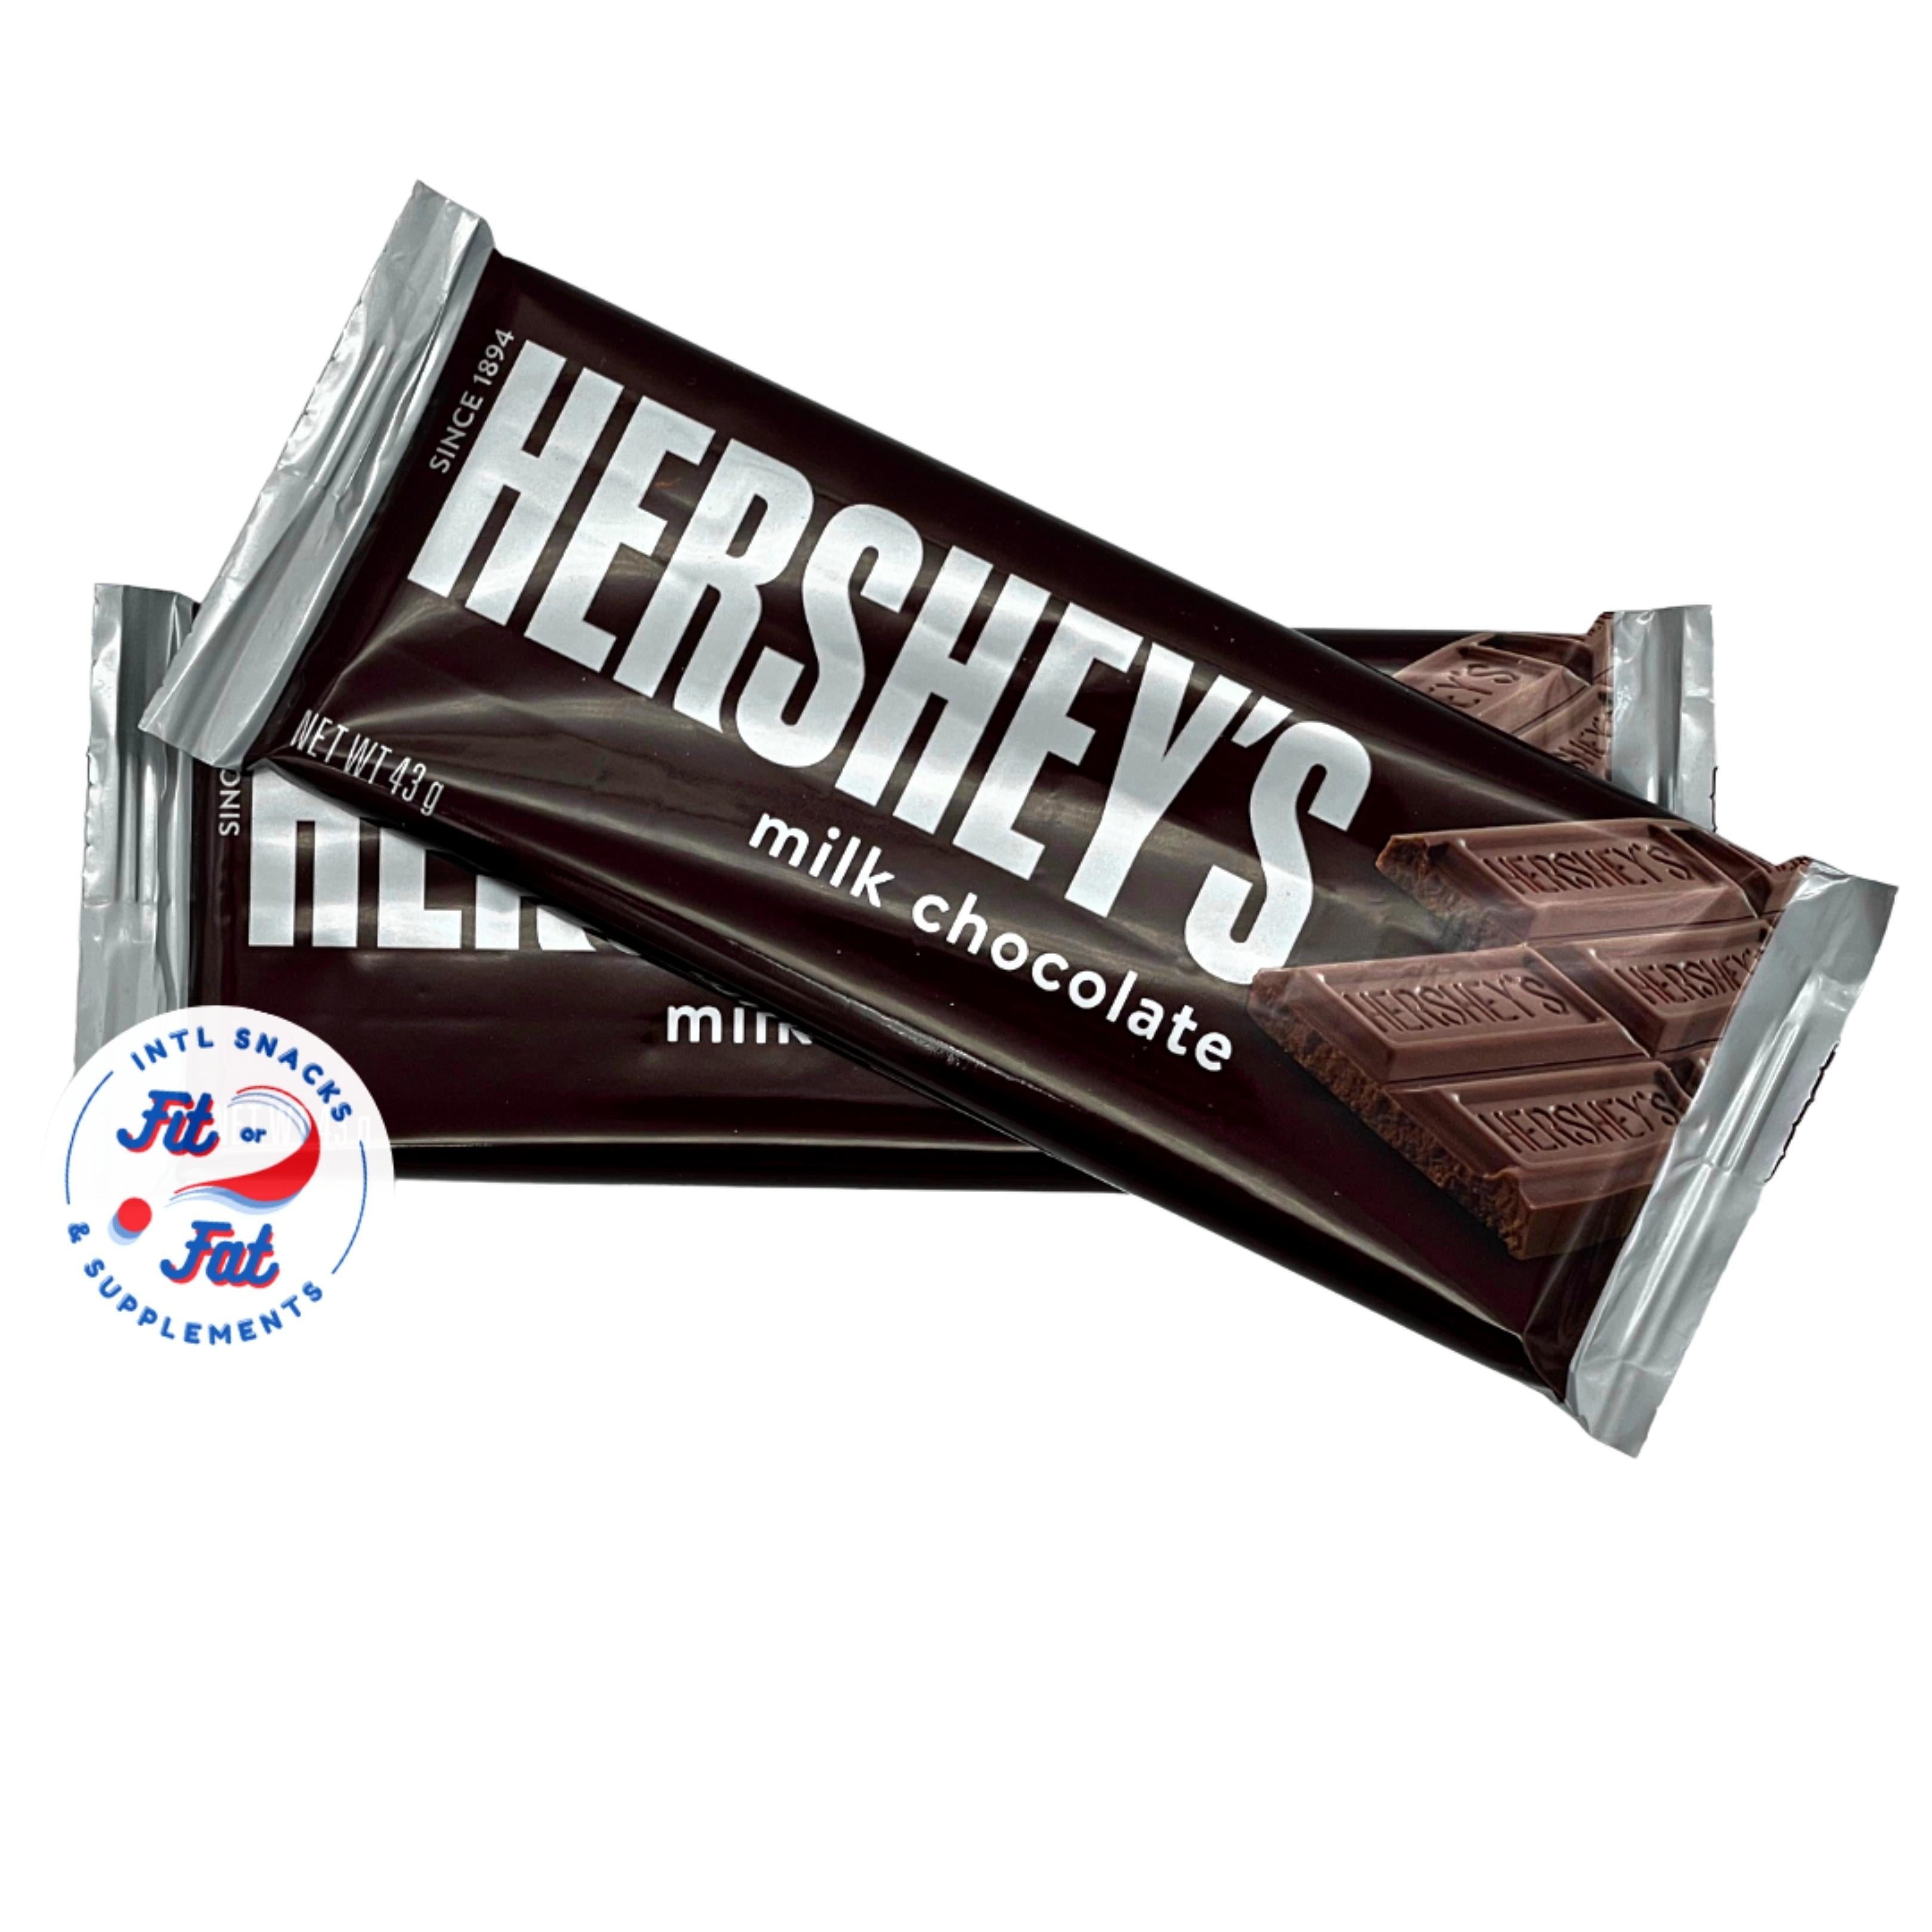 Hershey's - Milk Chocolate Bar / Tavoletta di Cioccolato al Latte 43g